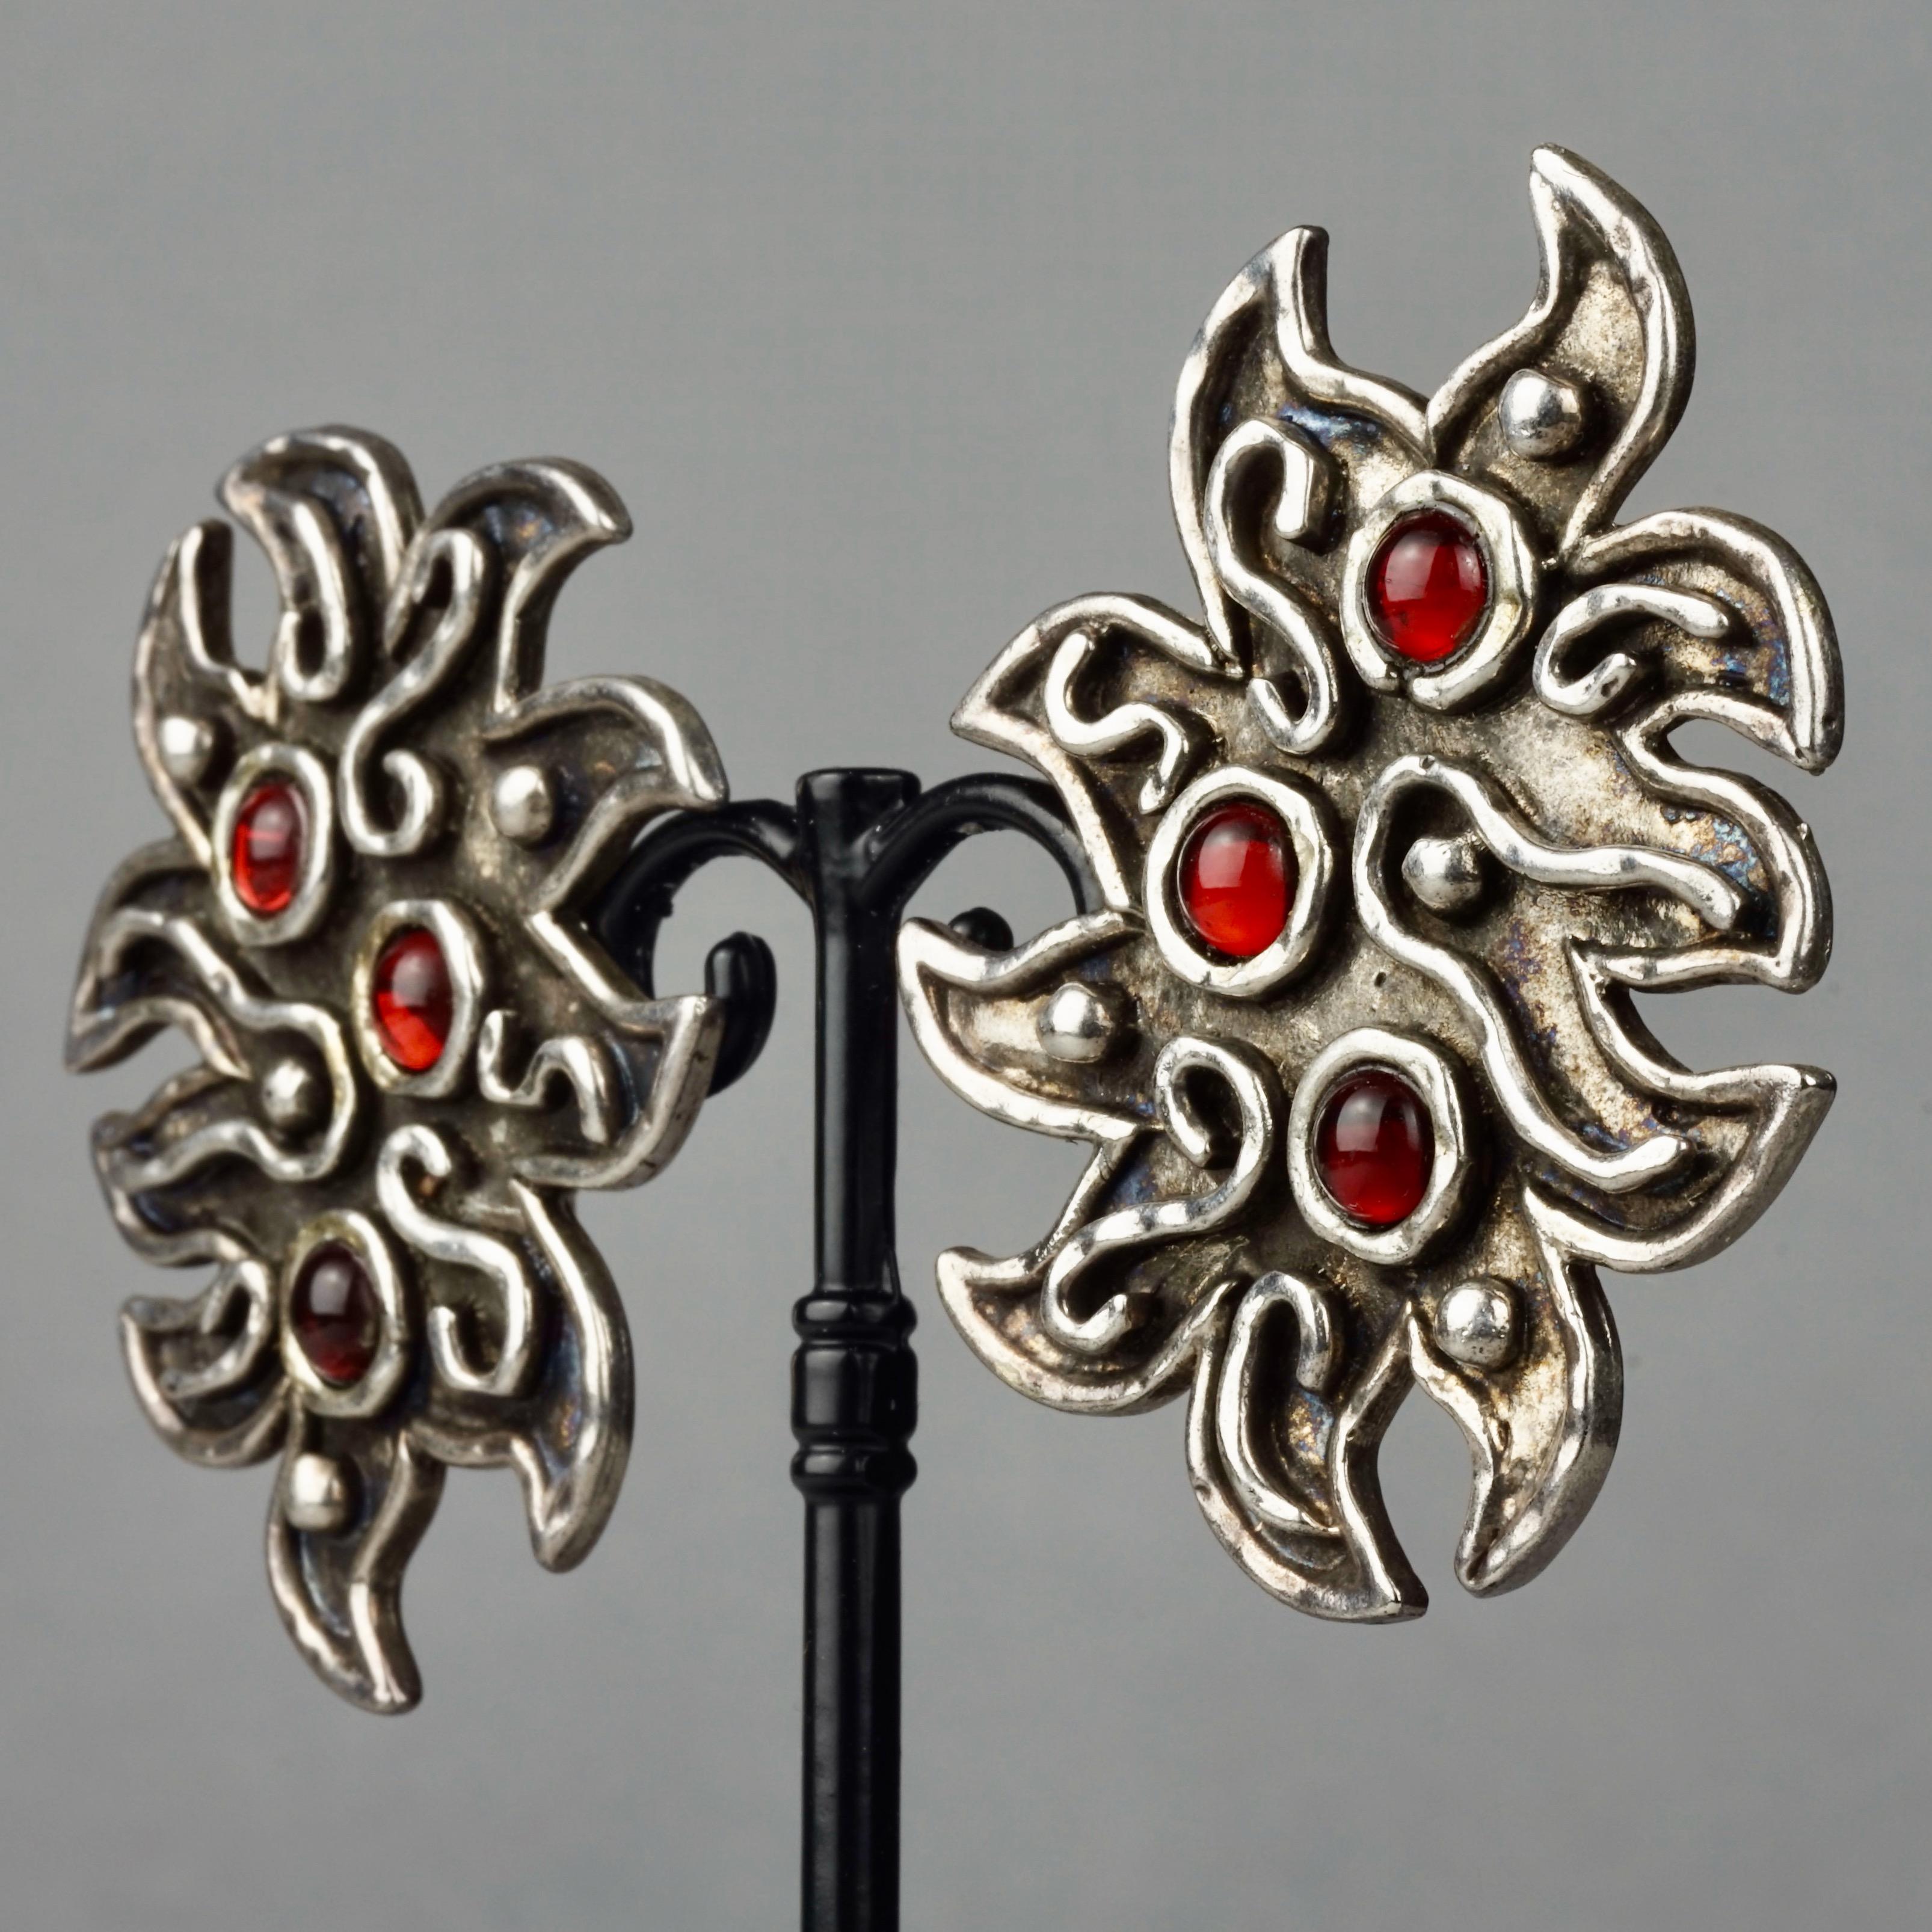 Vintage Massive EDOUARD RAMBAUD Ethnic Jeweled Silver Earrings For Sale 2